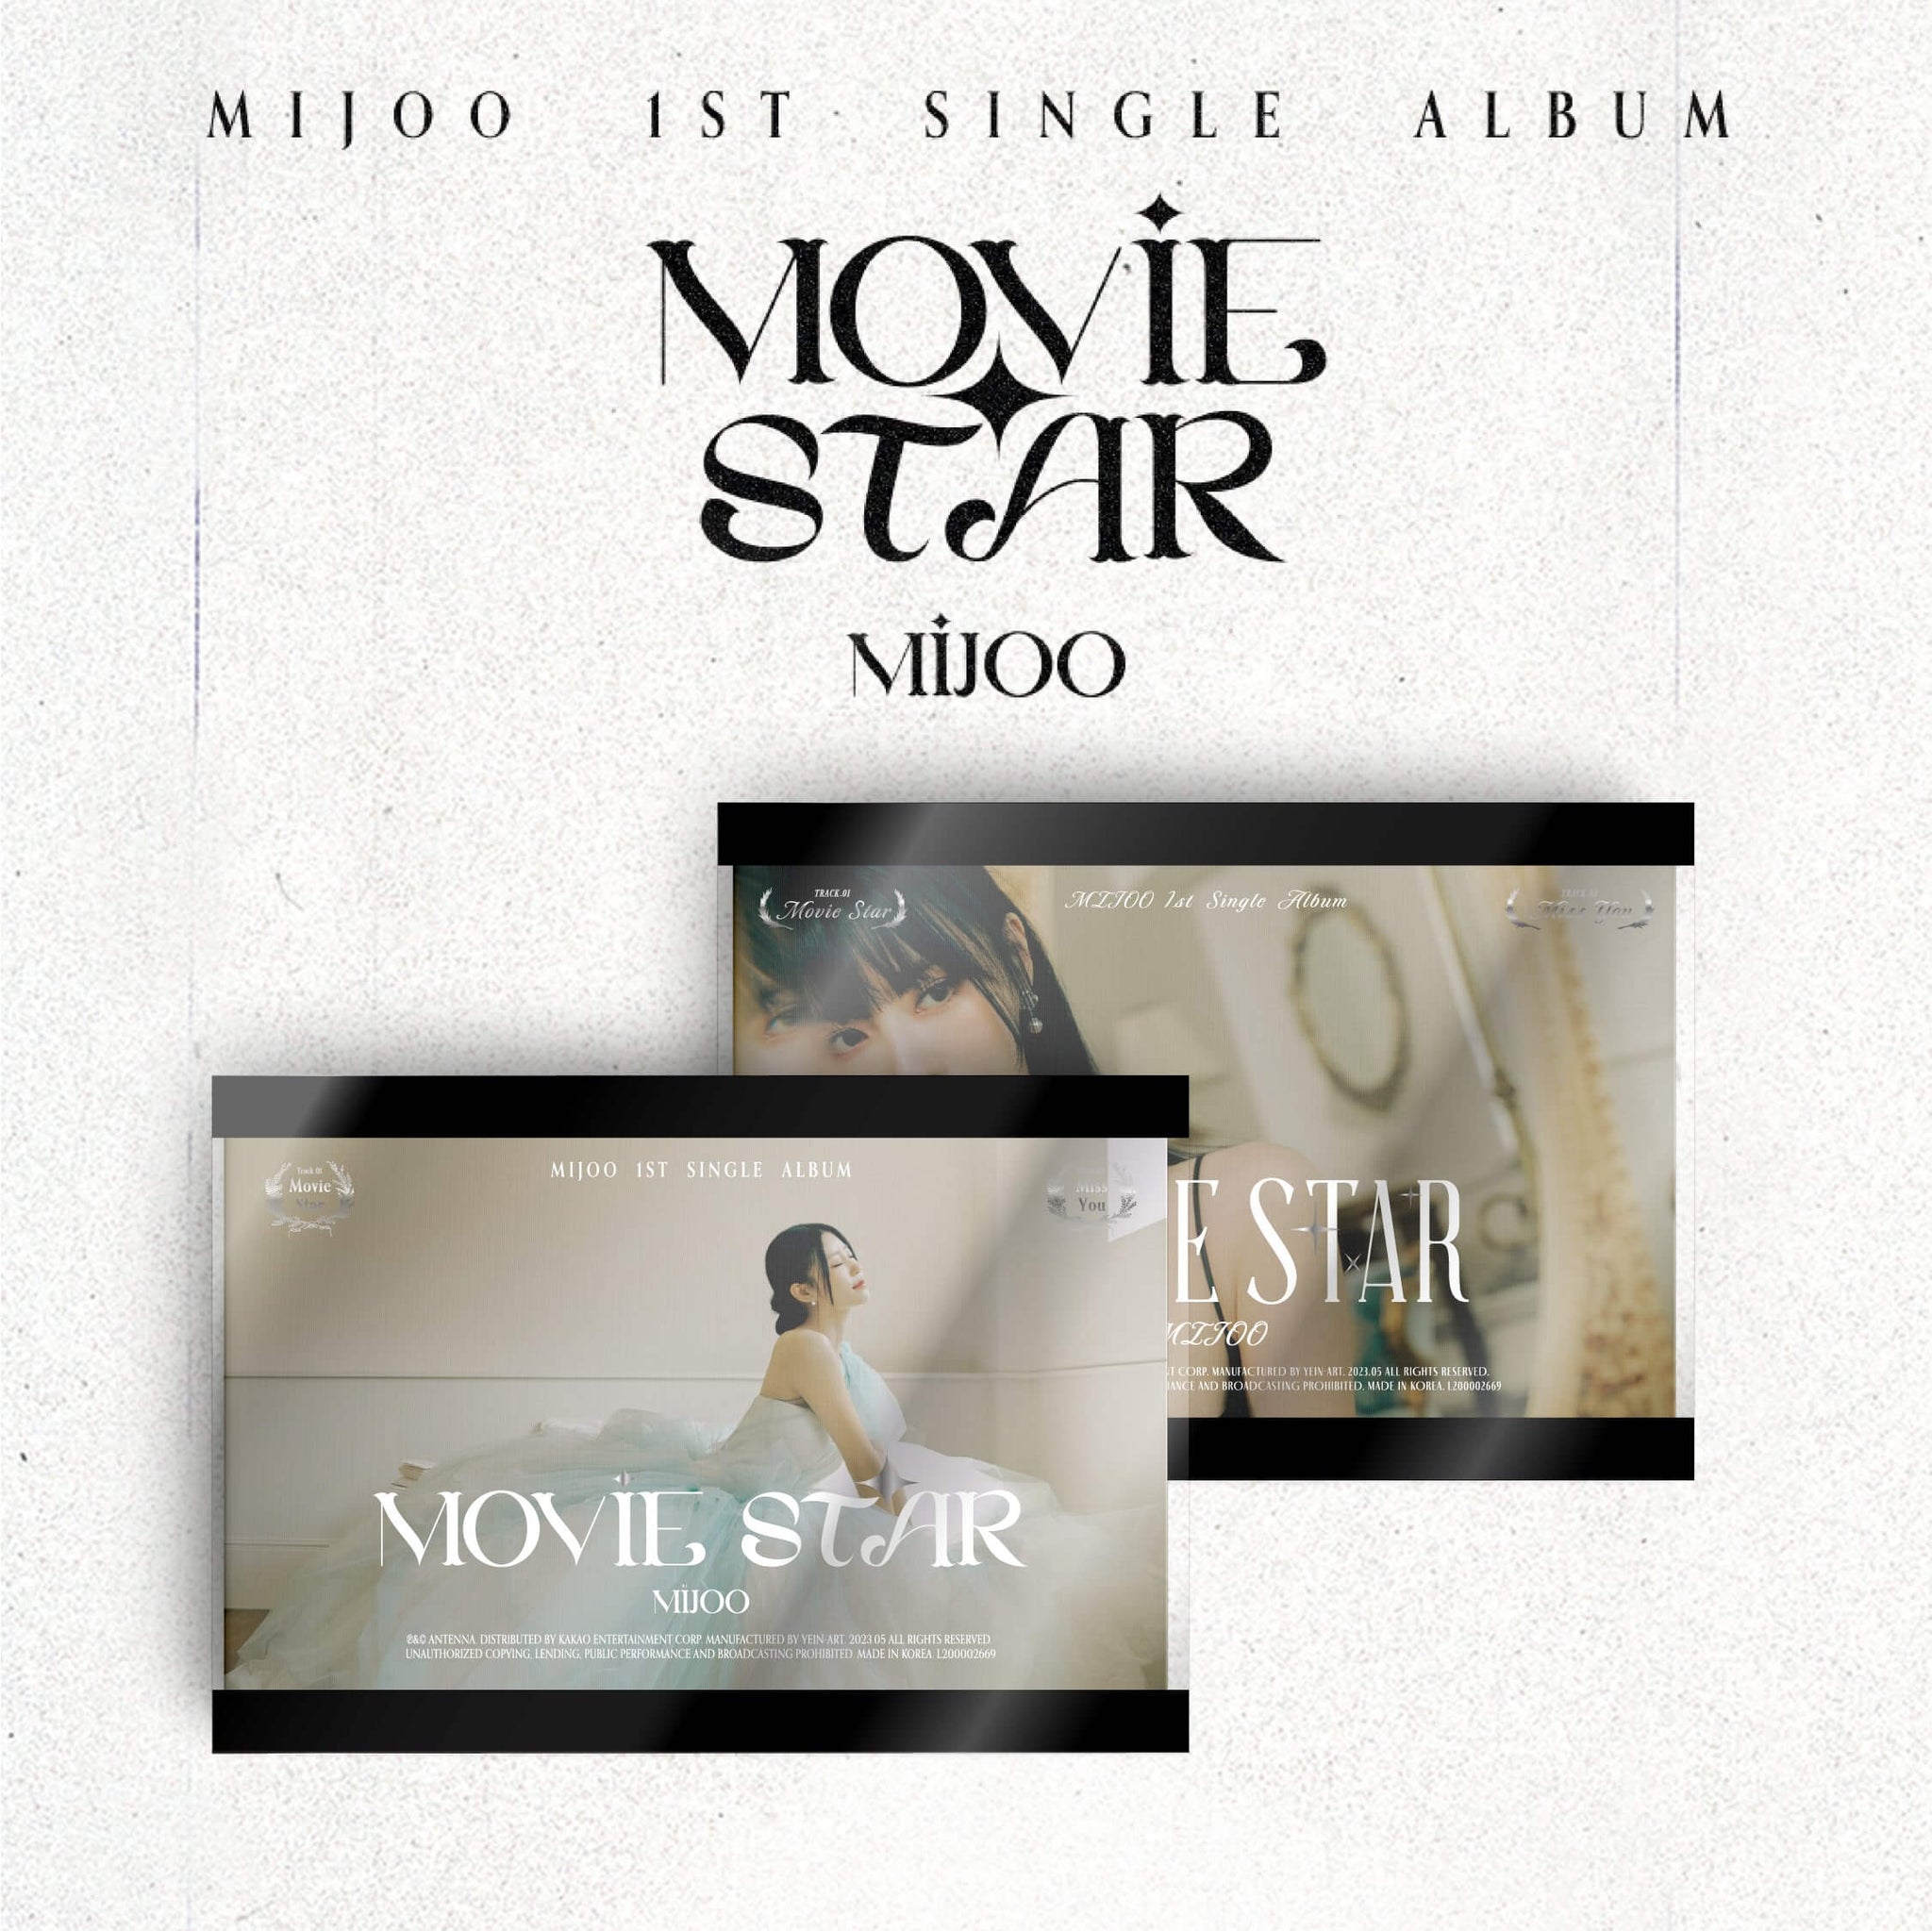 Mijoo 1st Single Album Movie Star - Modern / Classic Version